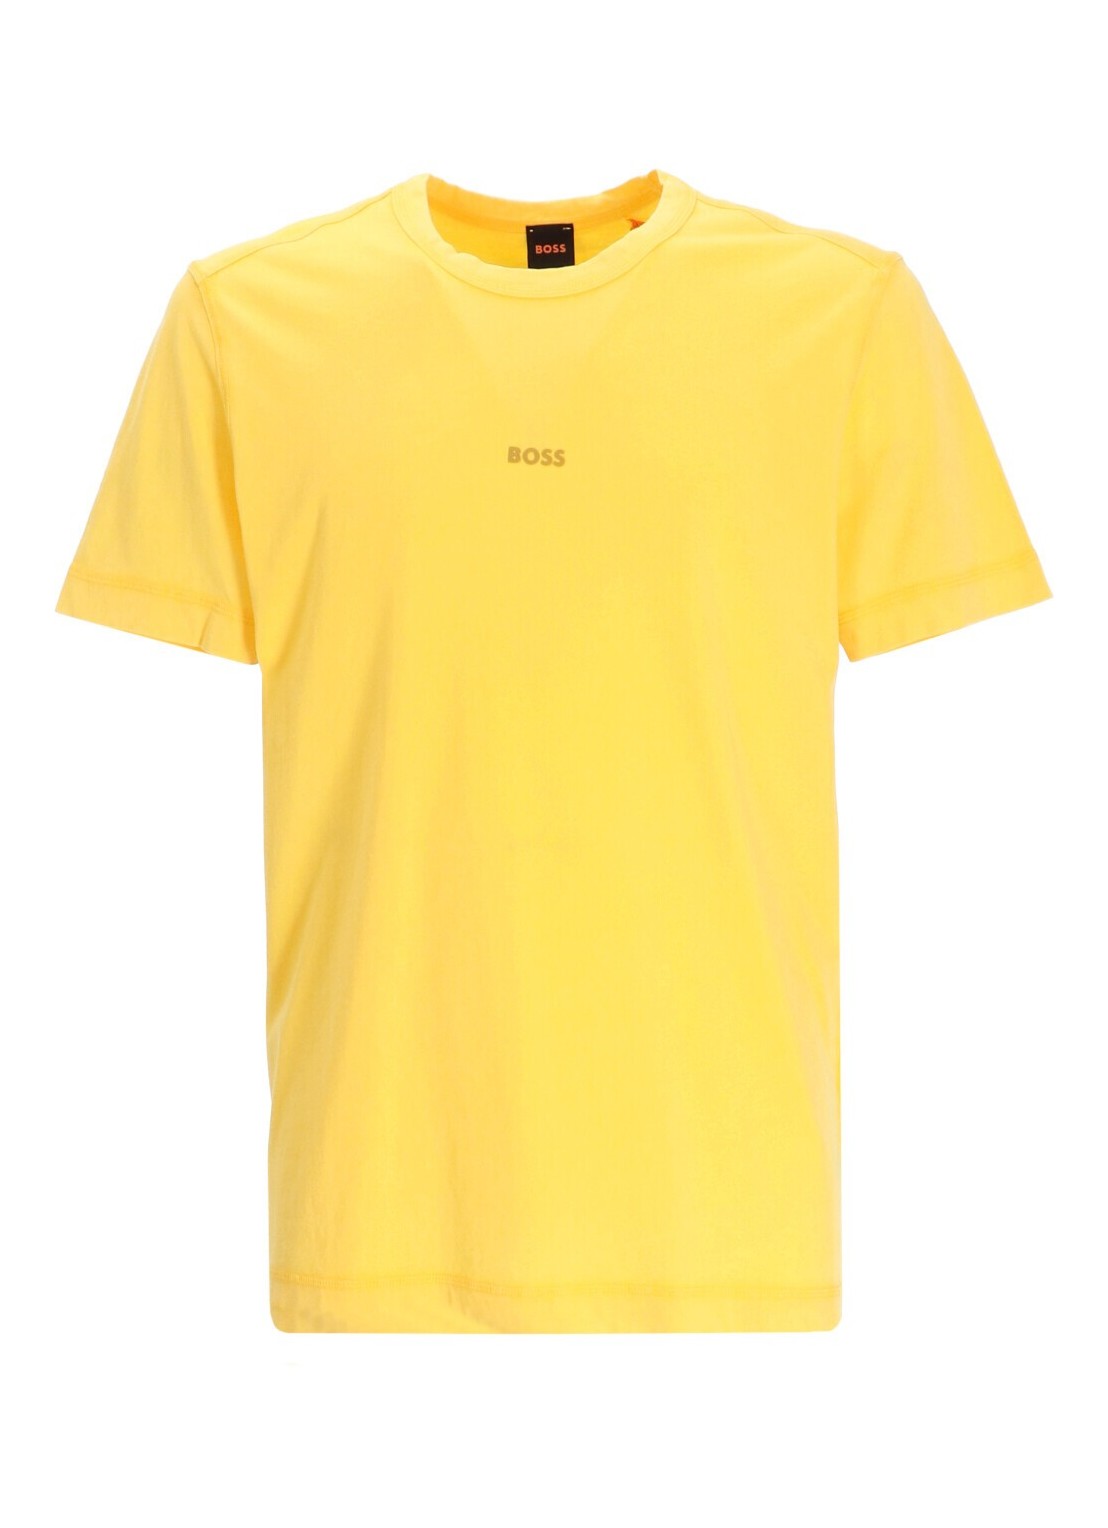 Camiseta boss t-shirt man tokks 50502173 740 talla L
 